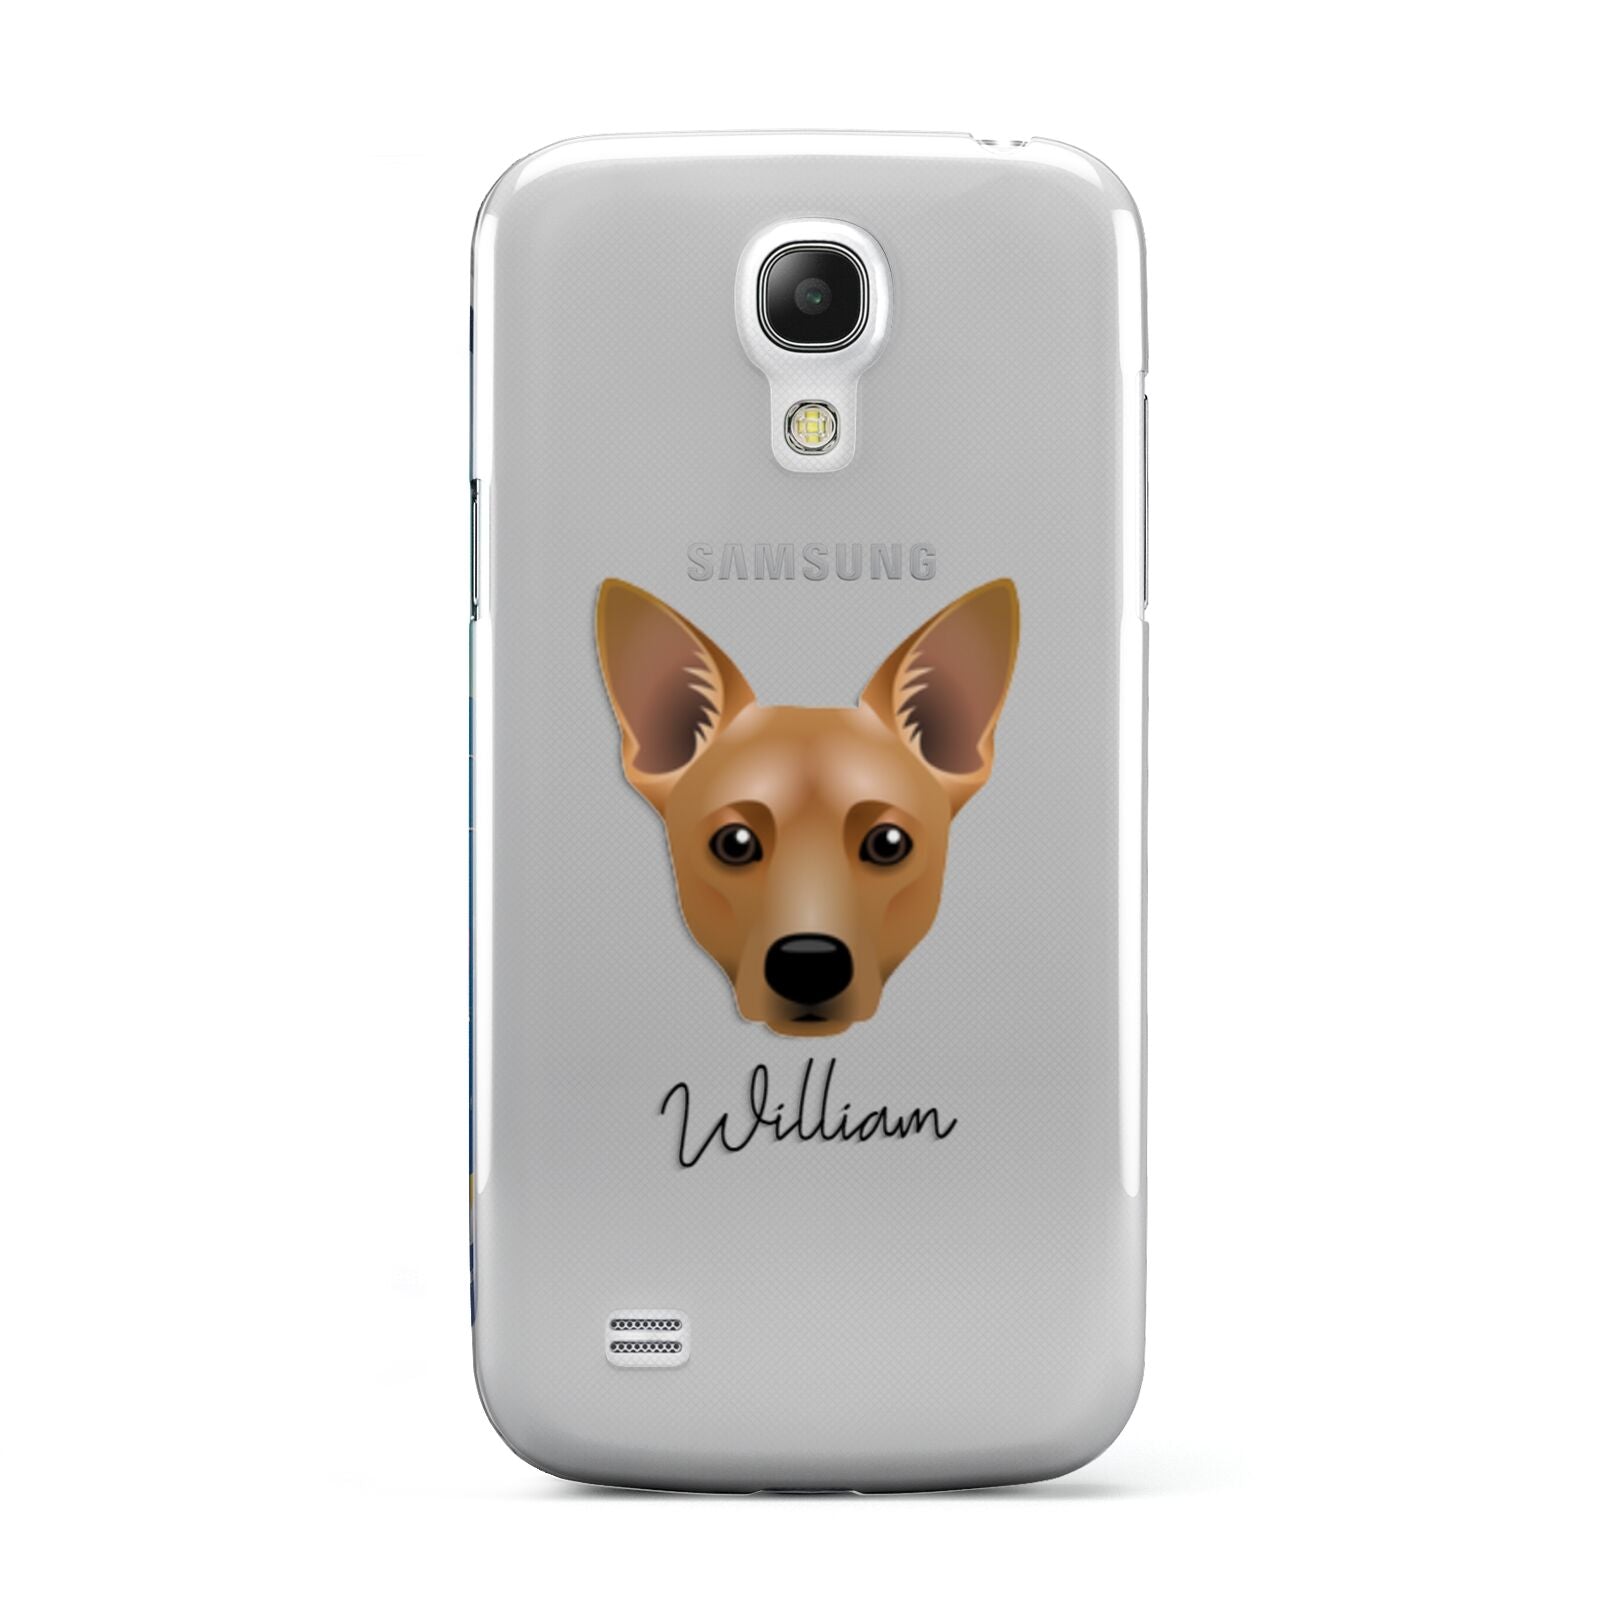 Cojack Personalised Samsung Galaxy S4 Mini Case